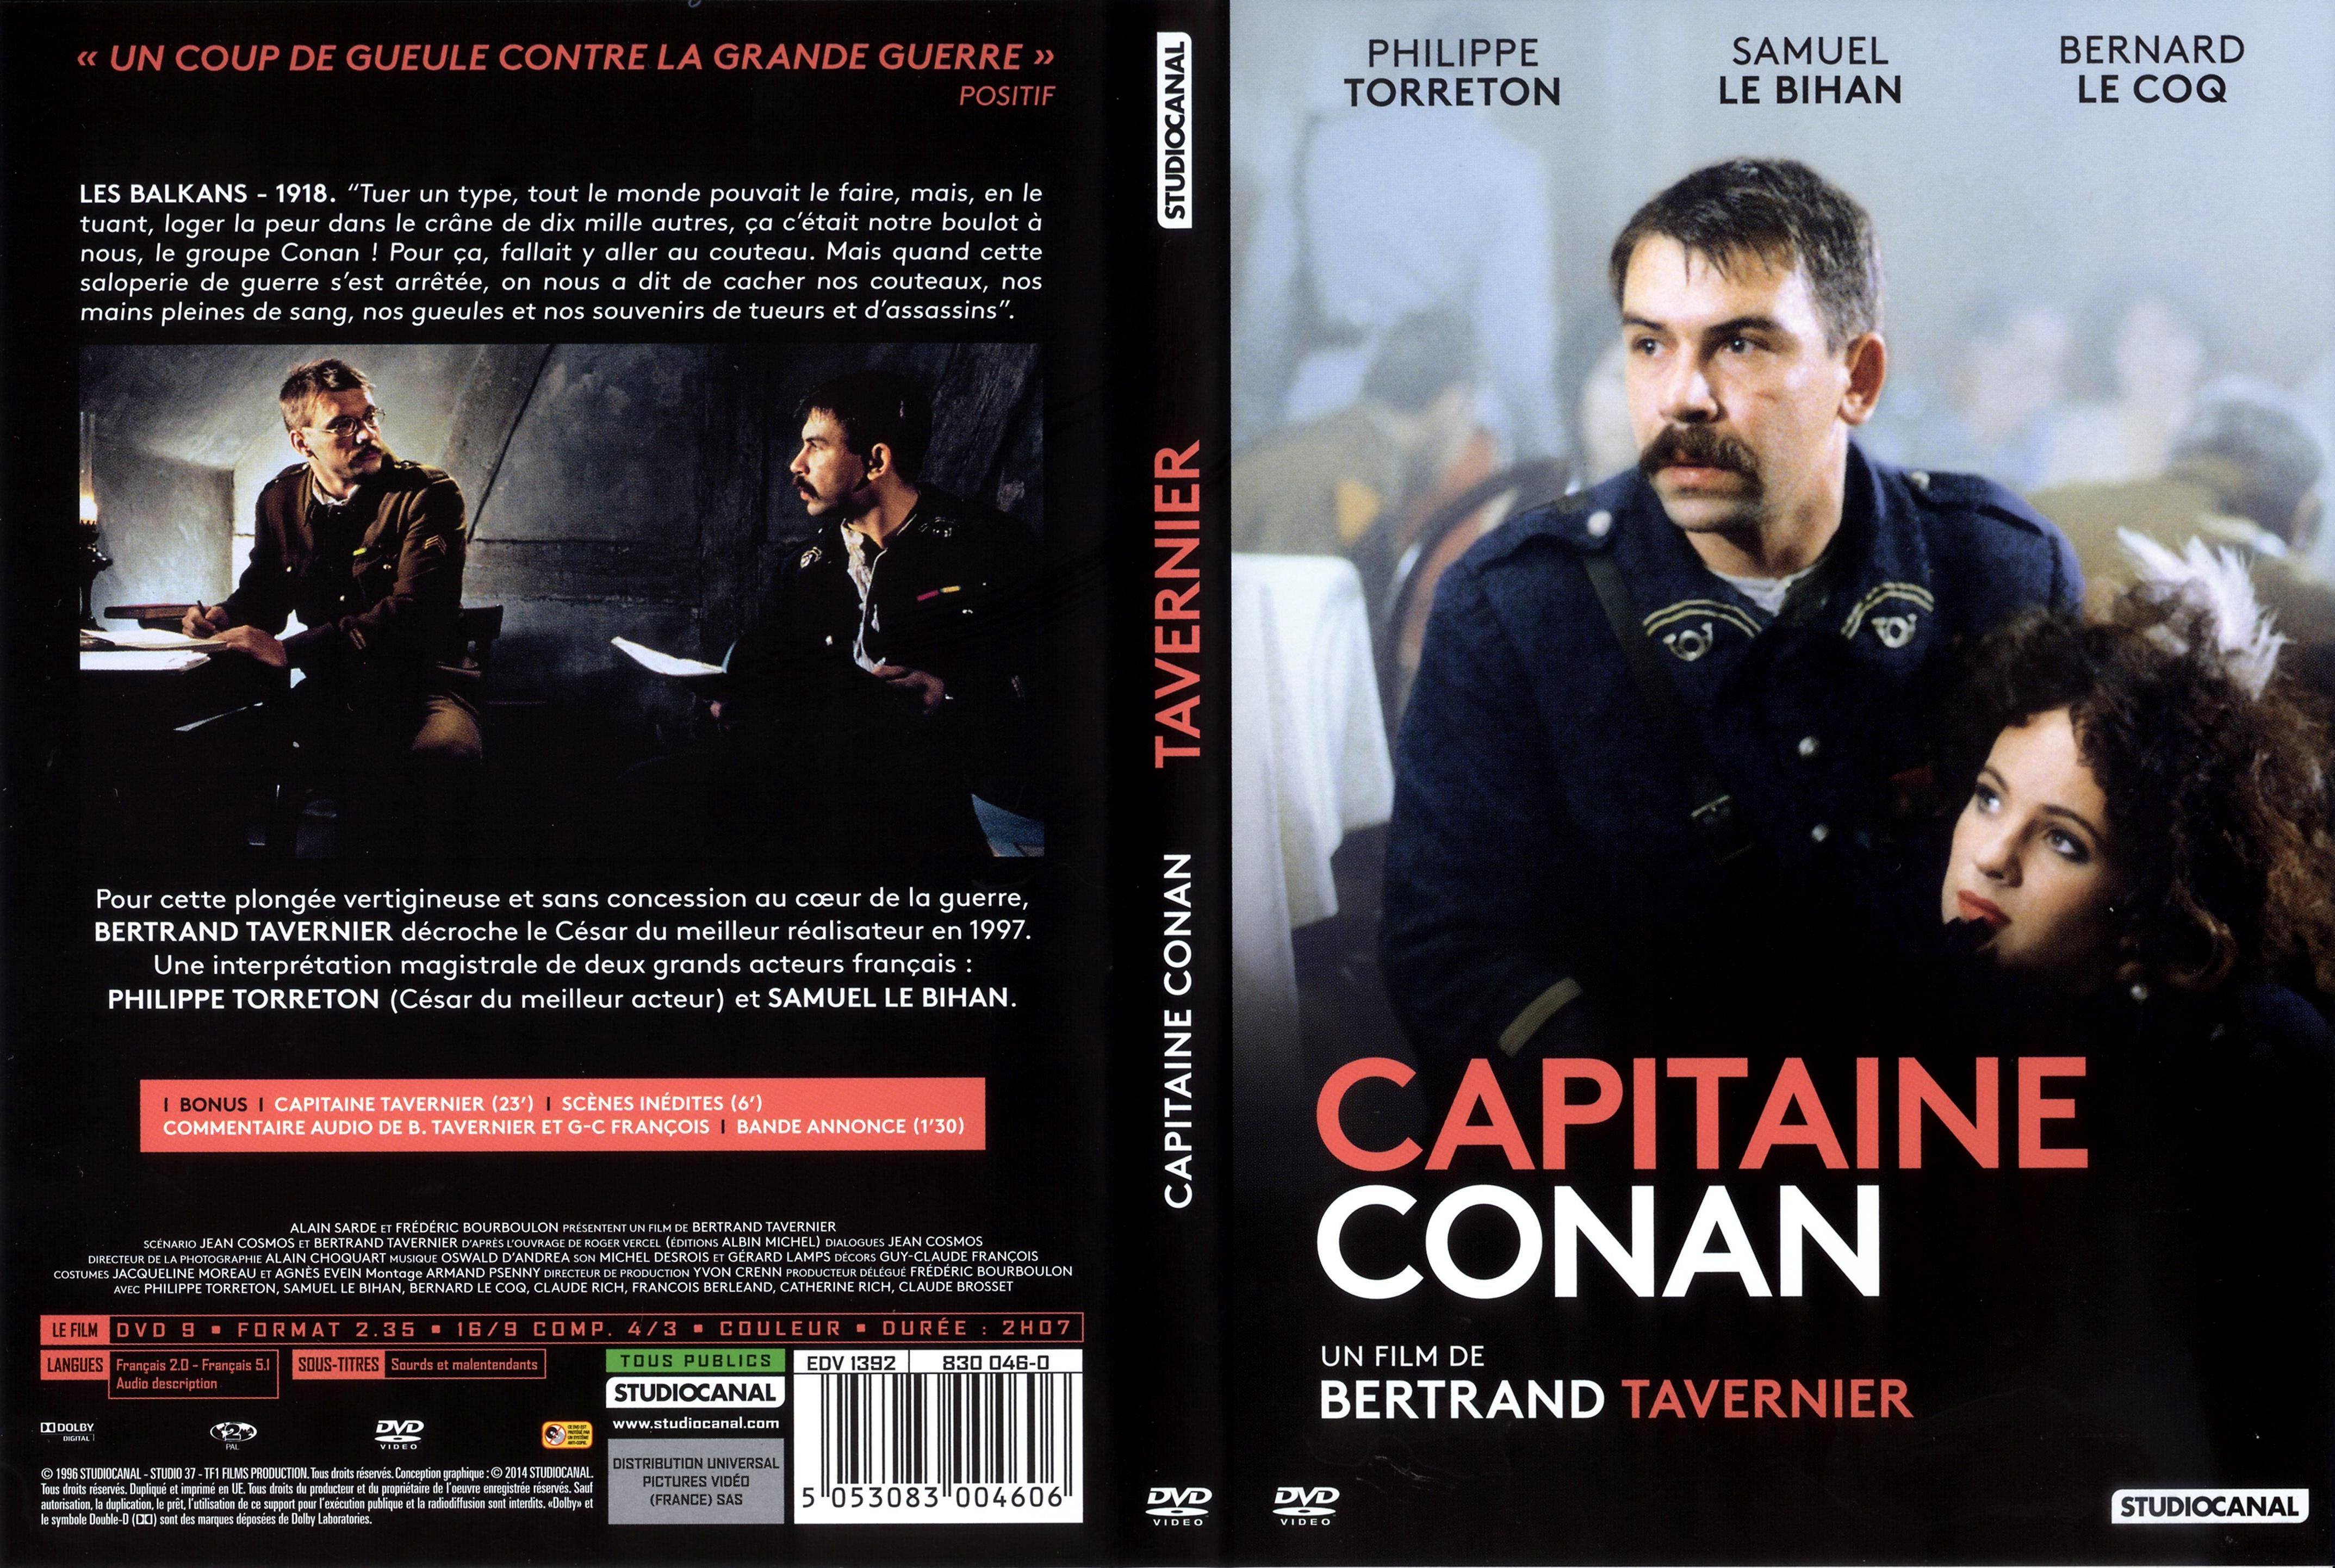 Jaquette DVD Capitaine Conan v2